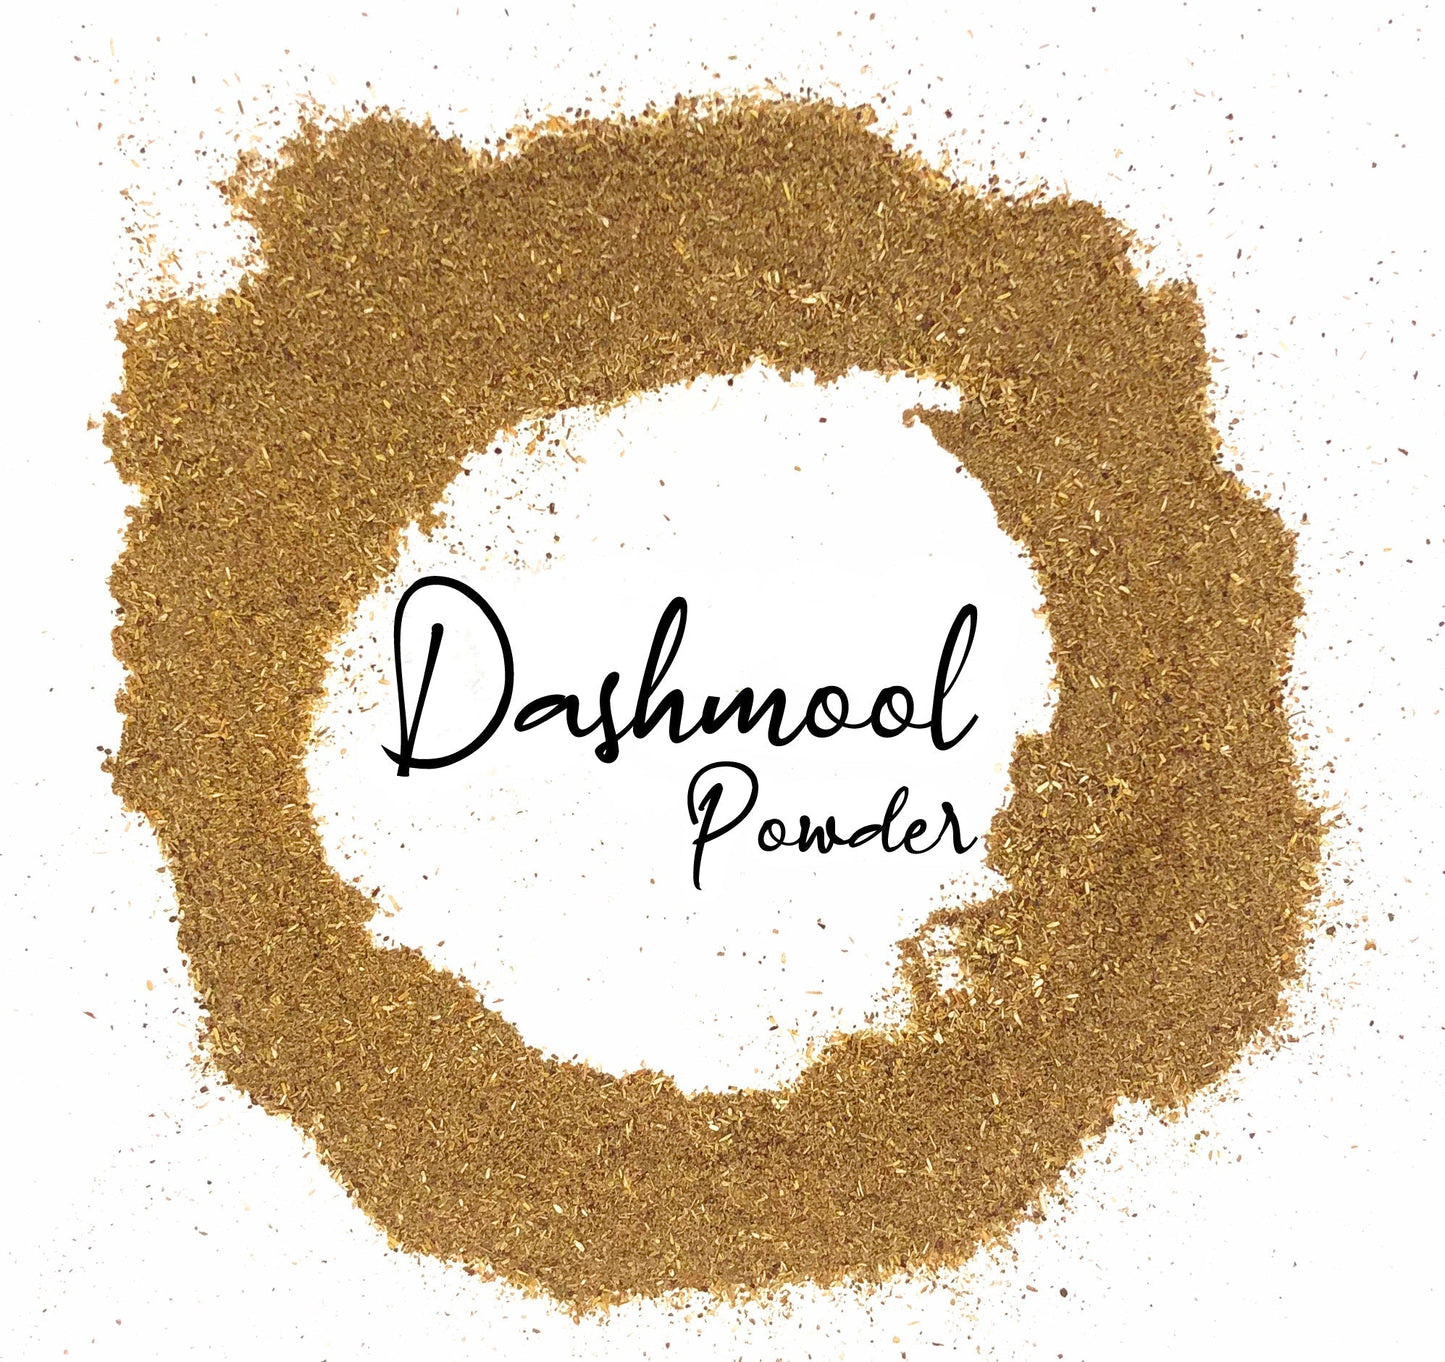 Wholesale Spices & Herbs - Dashmool Powder, Organic 1lb (454g) Bag